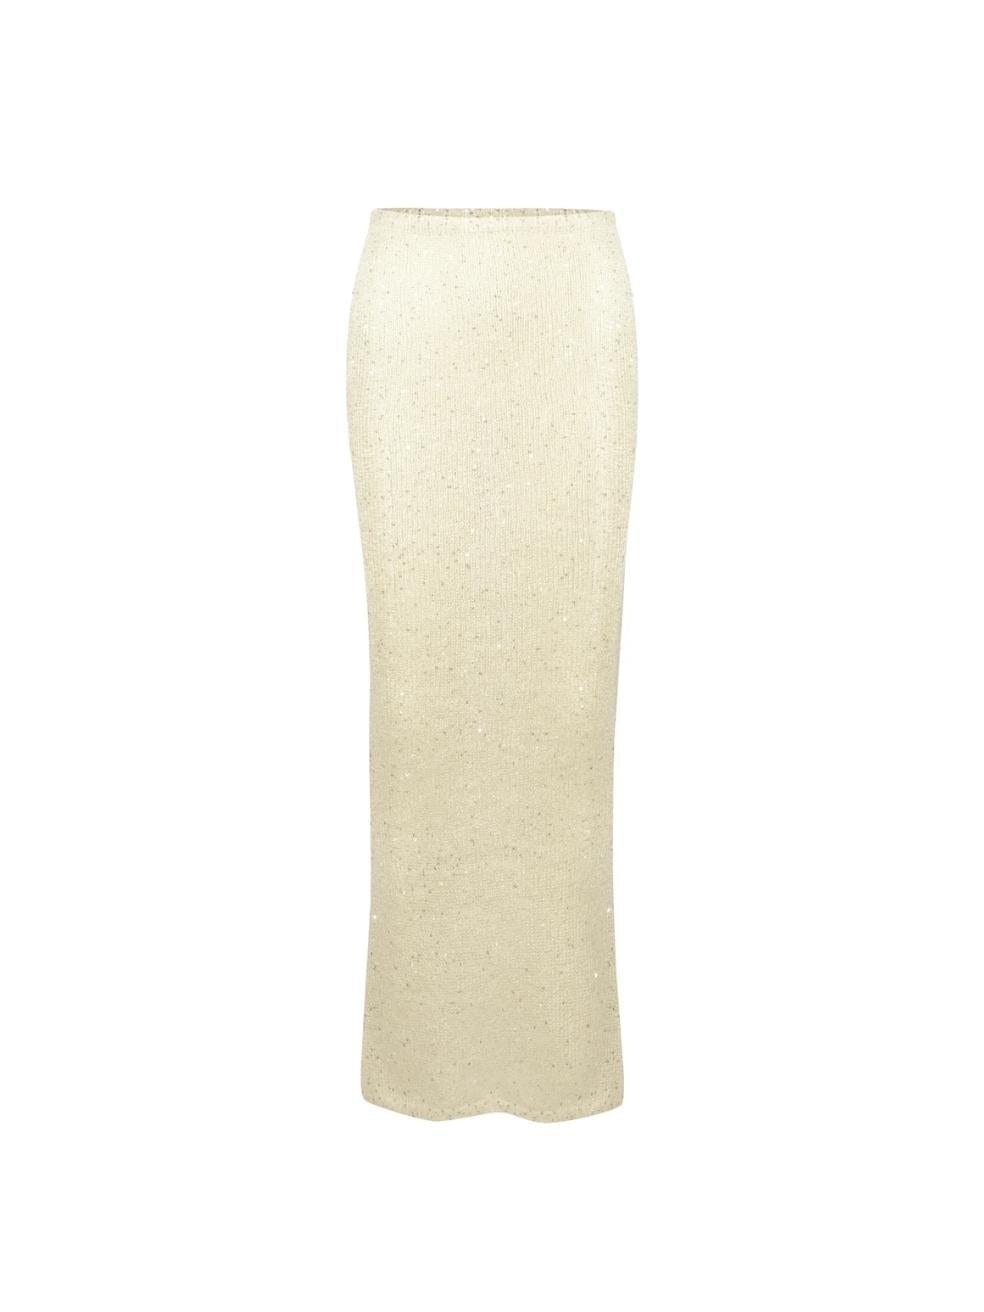 Carolina Skirt in Ivory Sequin